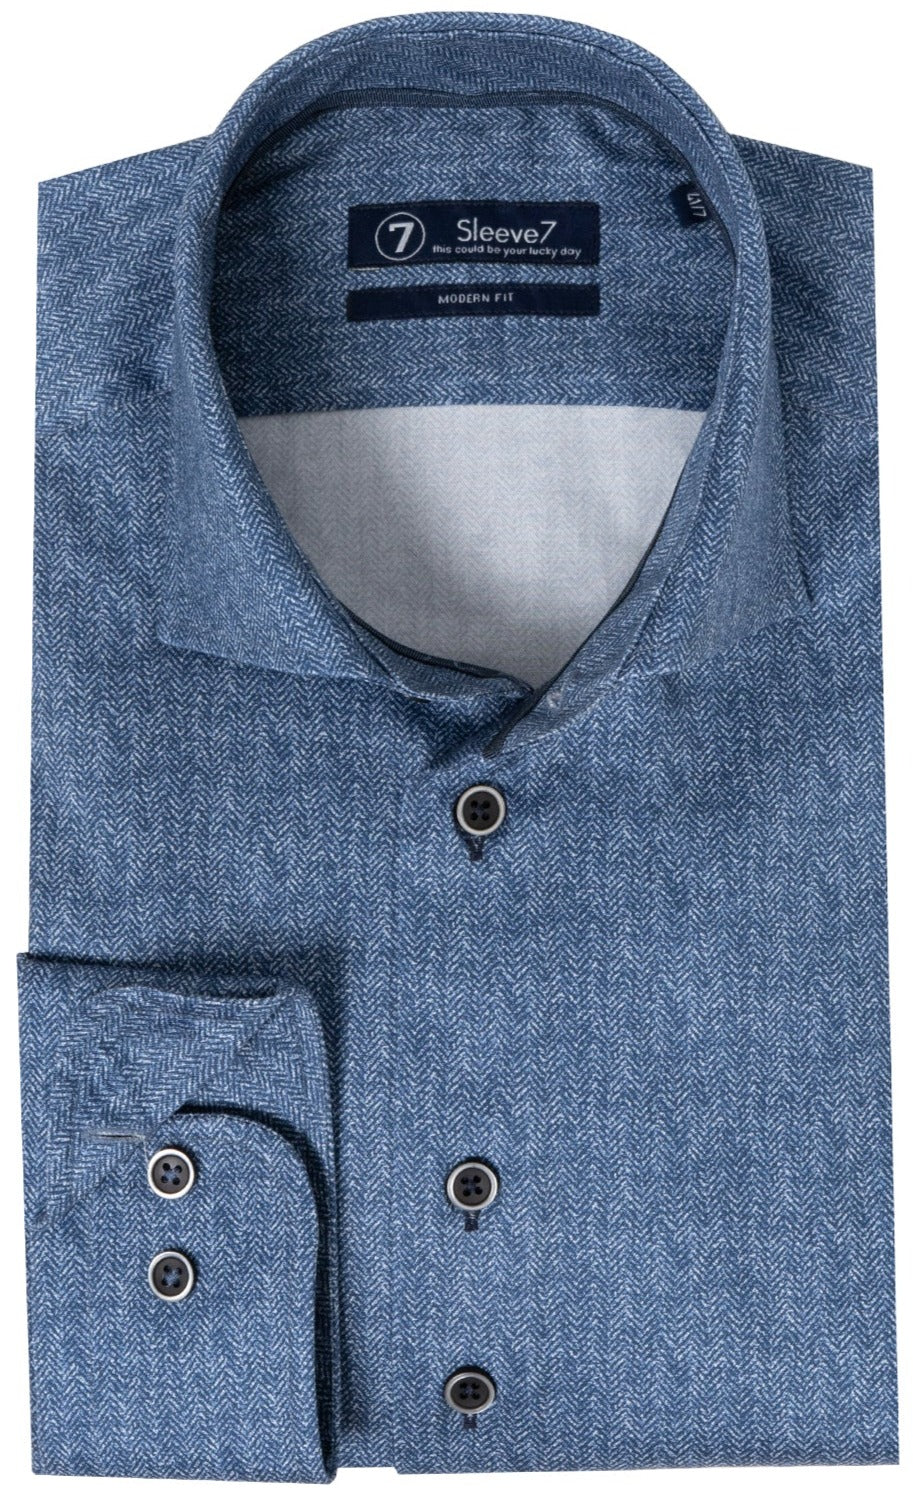 Kobalt Blauw Print Overhemd Mouwlengte 7 Sleeve7 – CJE